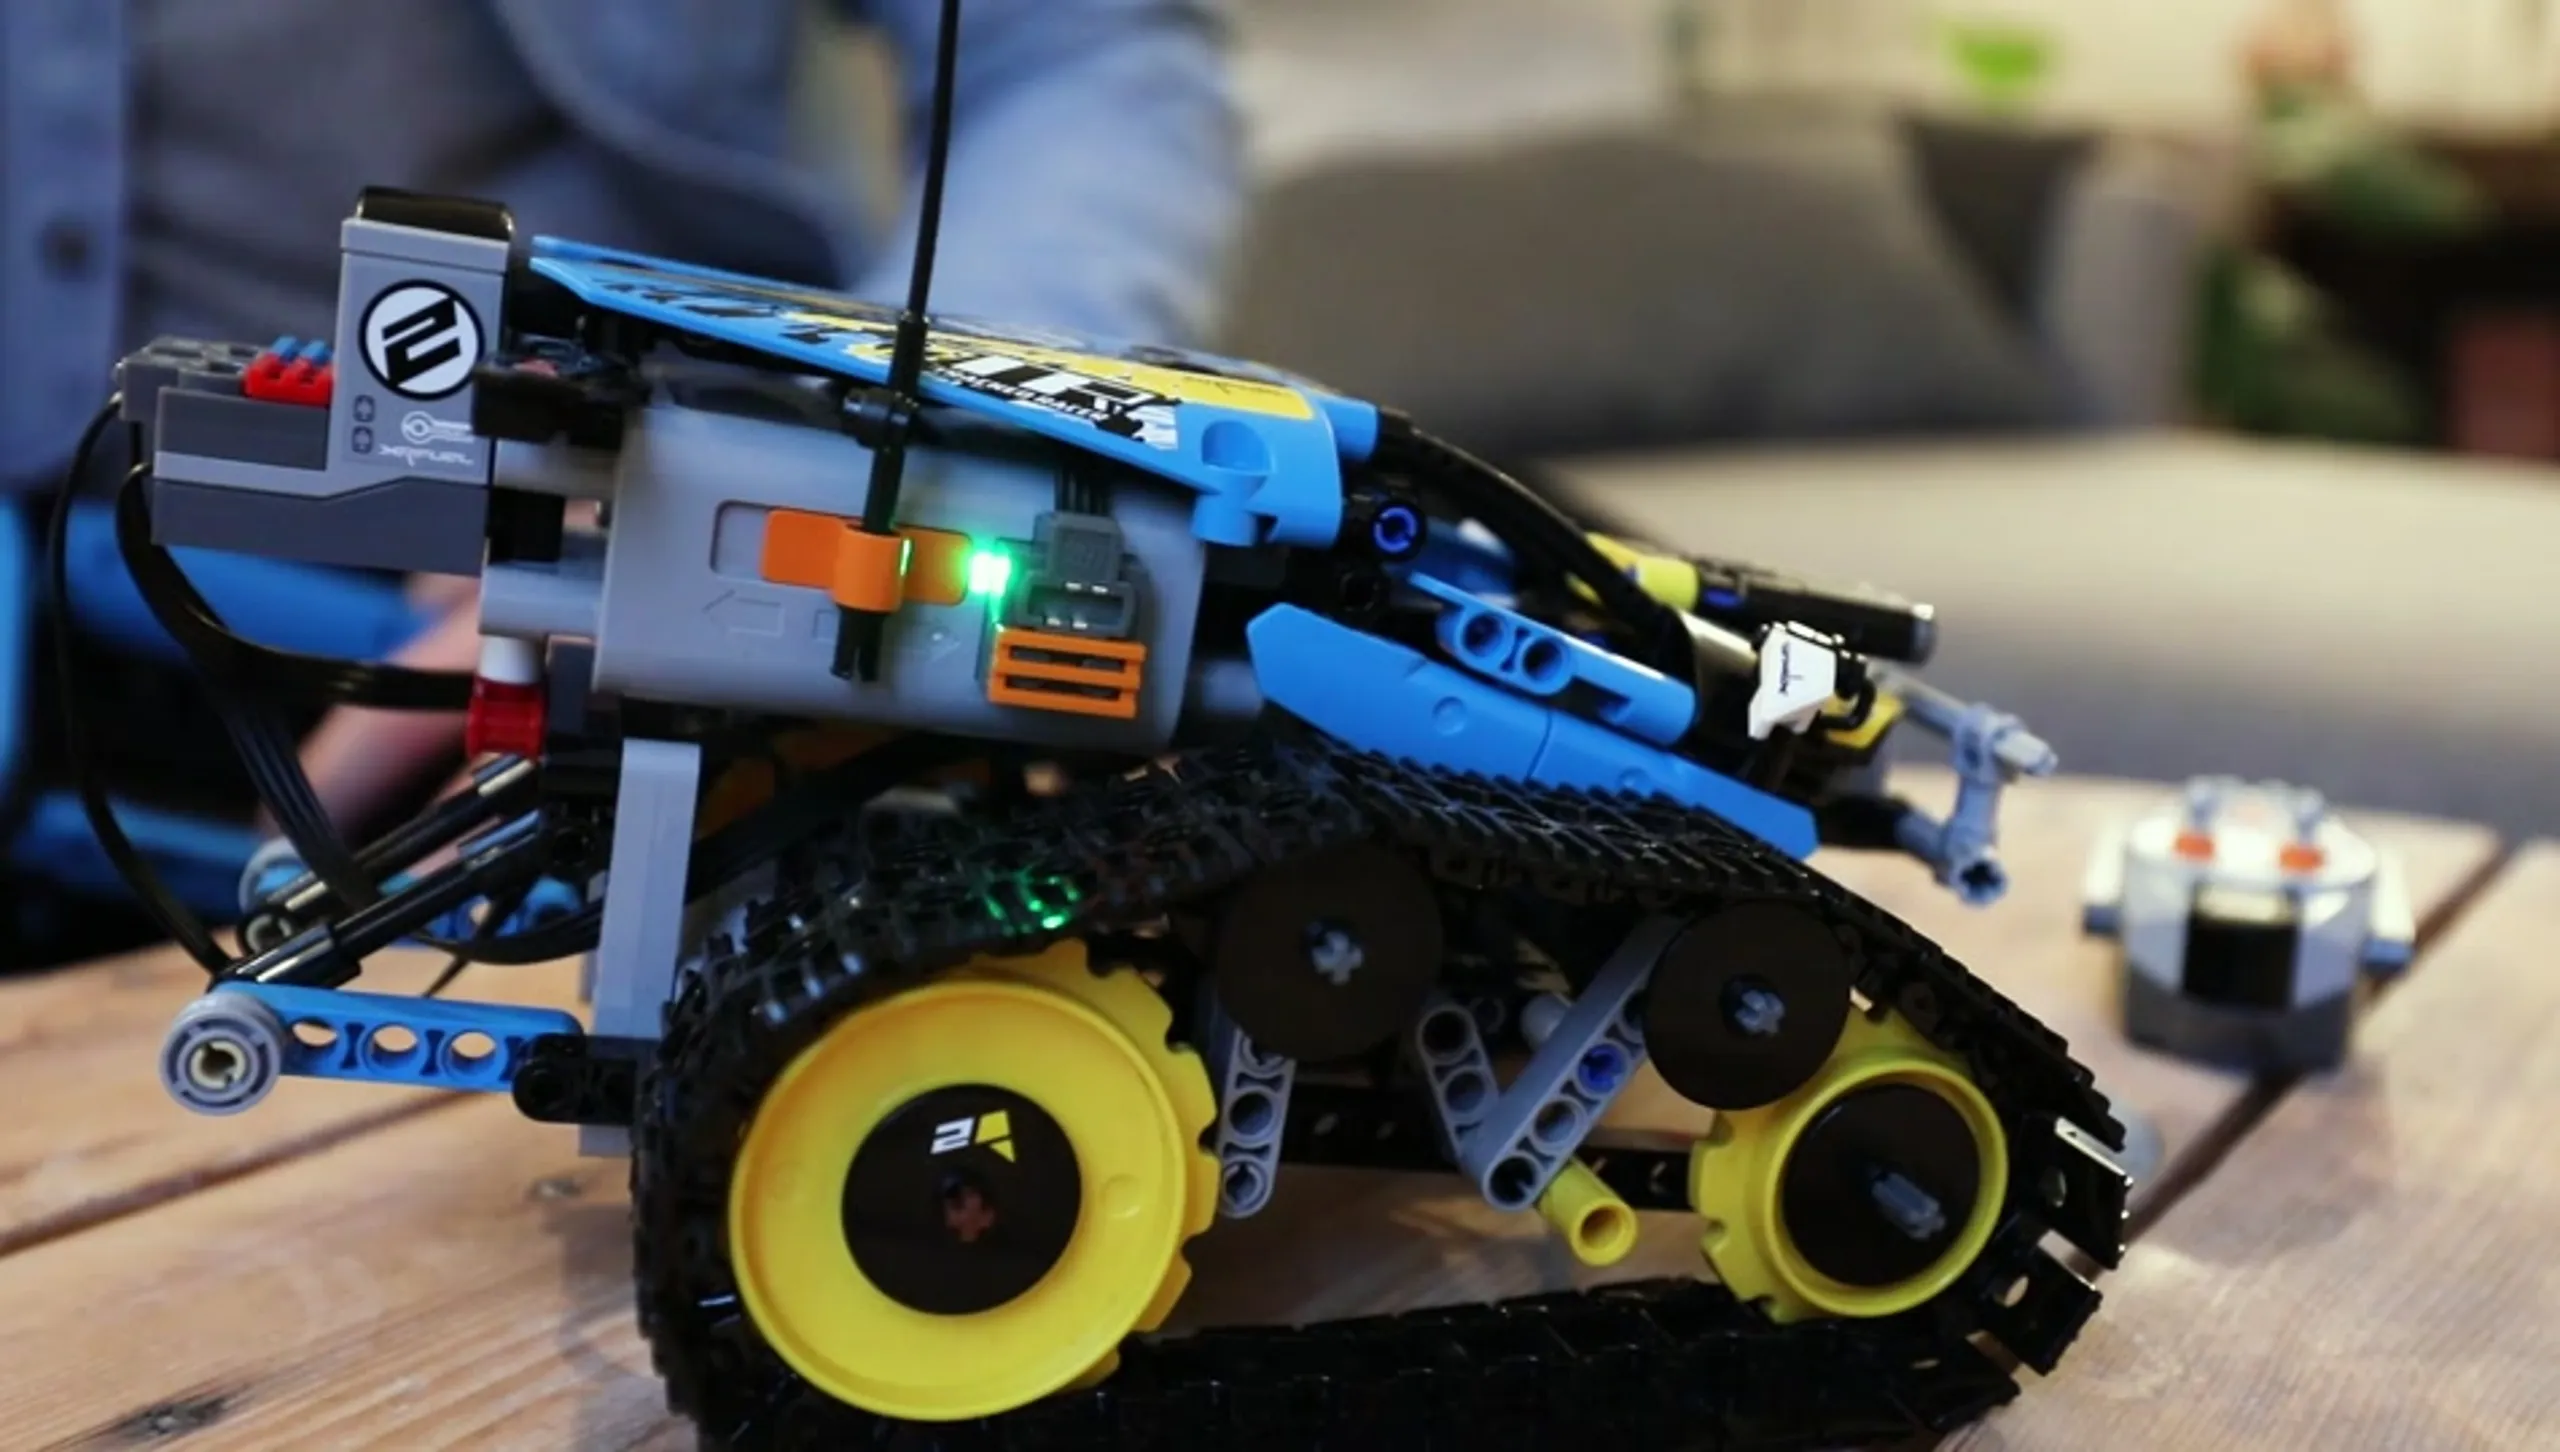 LEGO Japan takes Rebuilding the World to the next level